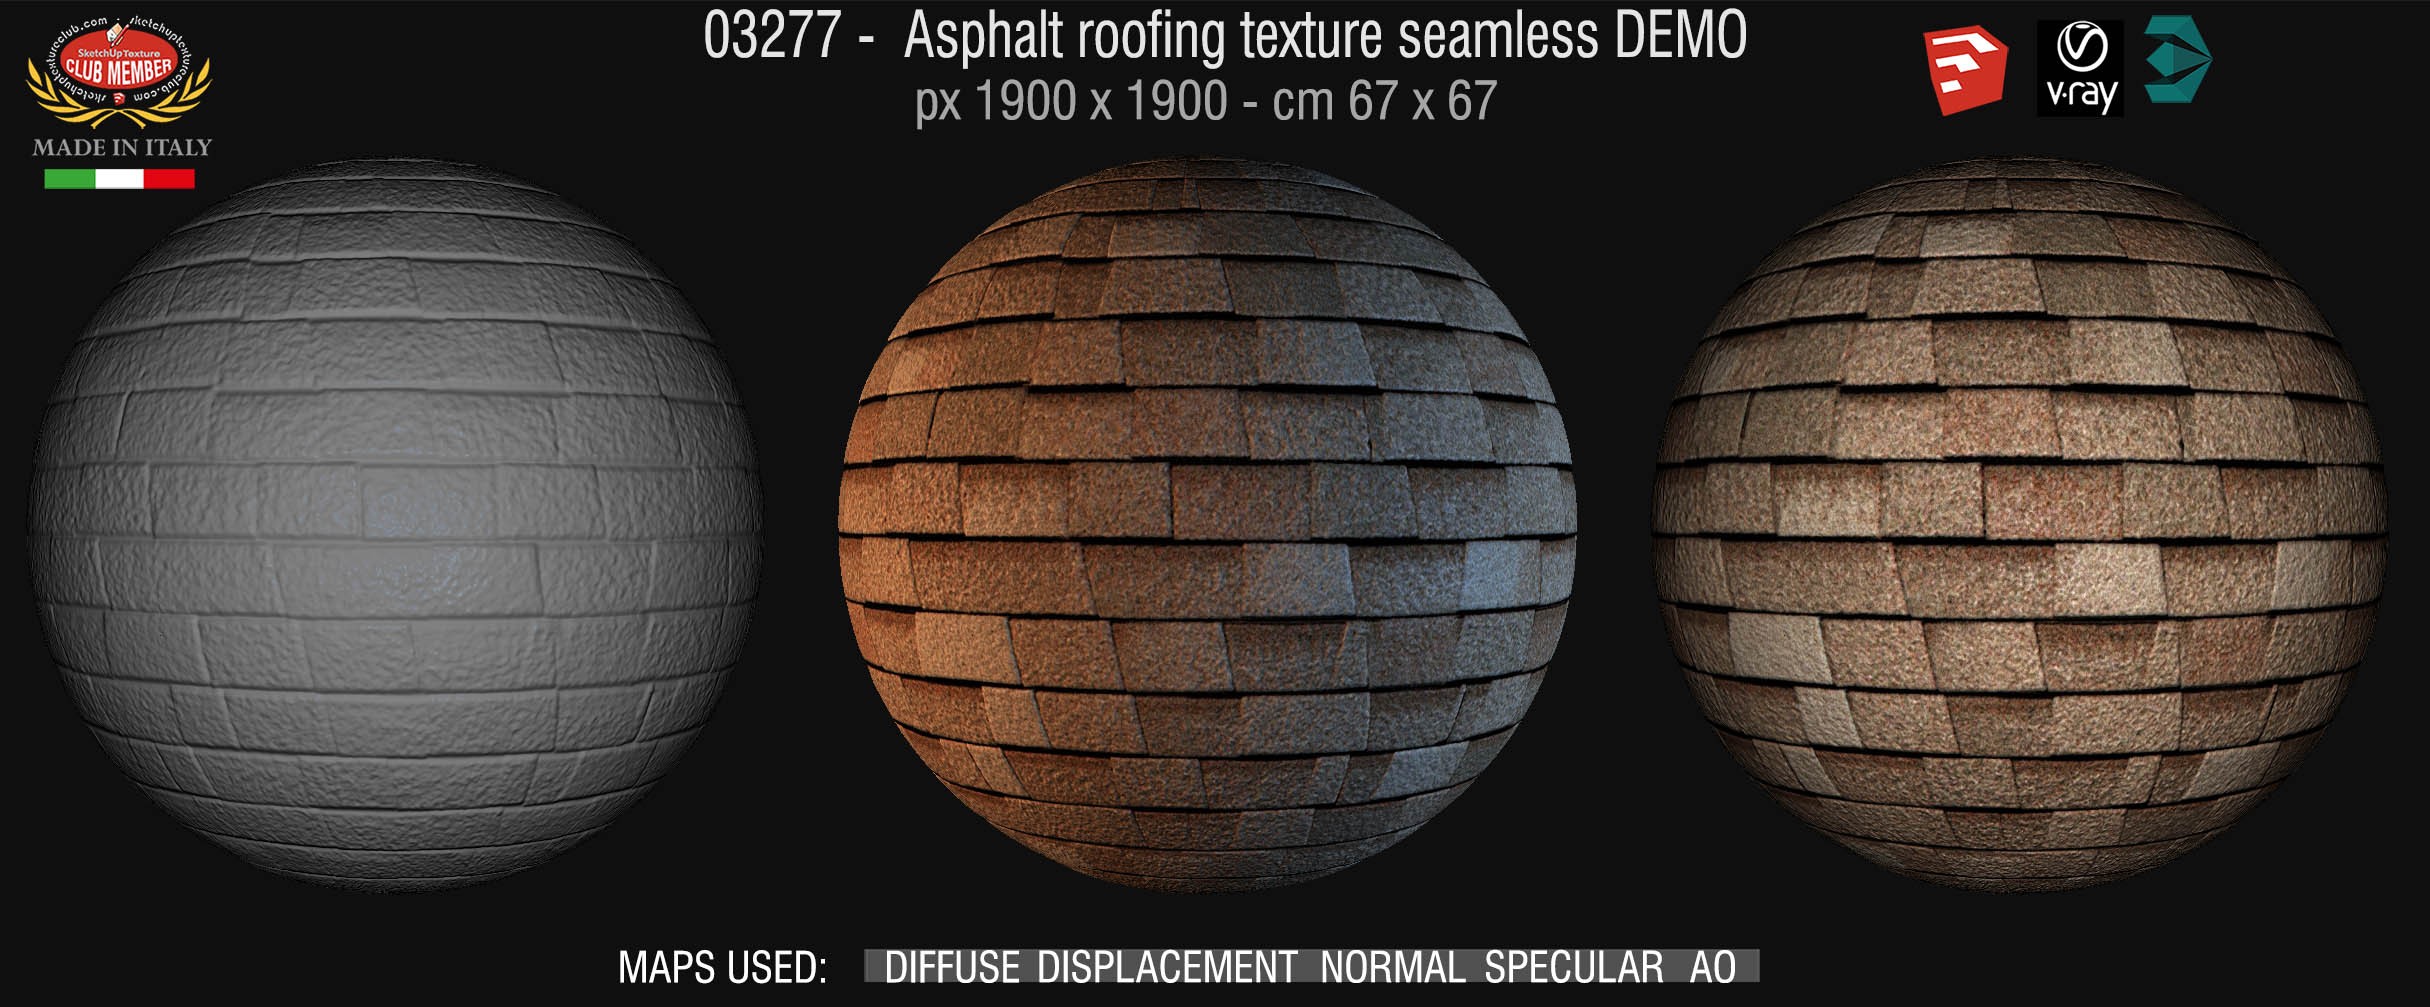 03277 Asphalt roofing texture + maps DEMO